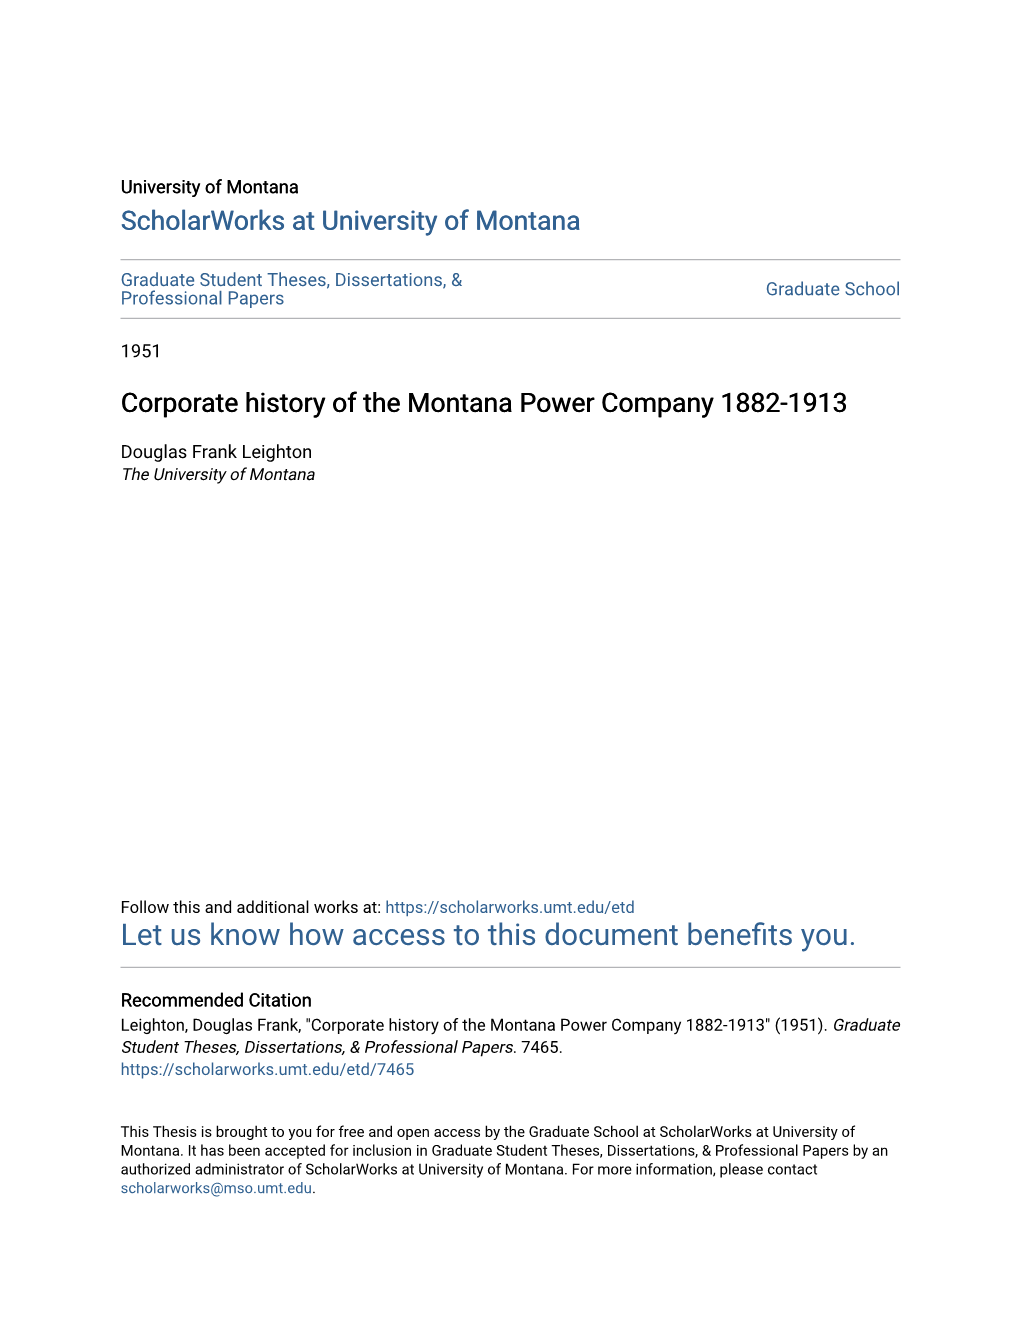 Corporate History of the Montana Power Company 1882-1913